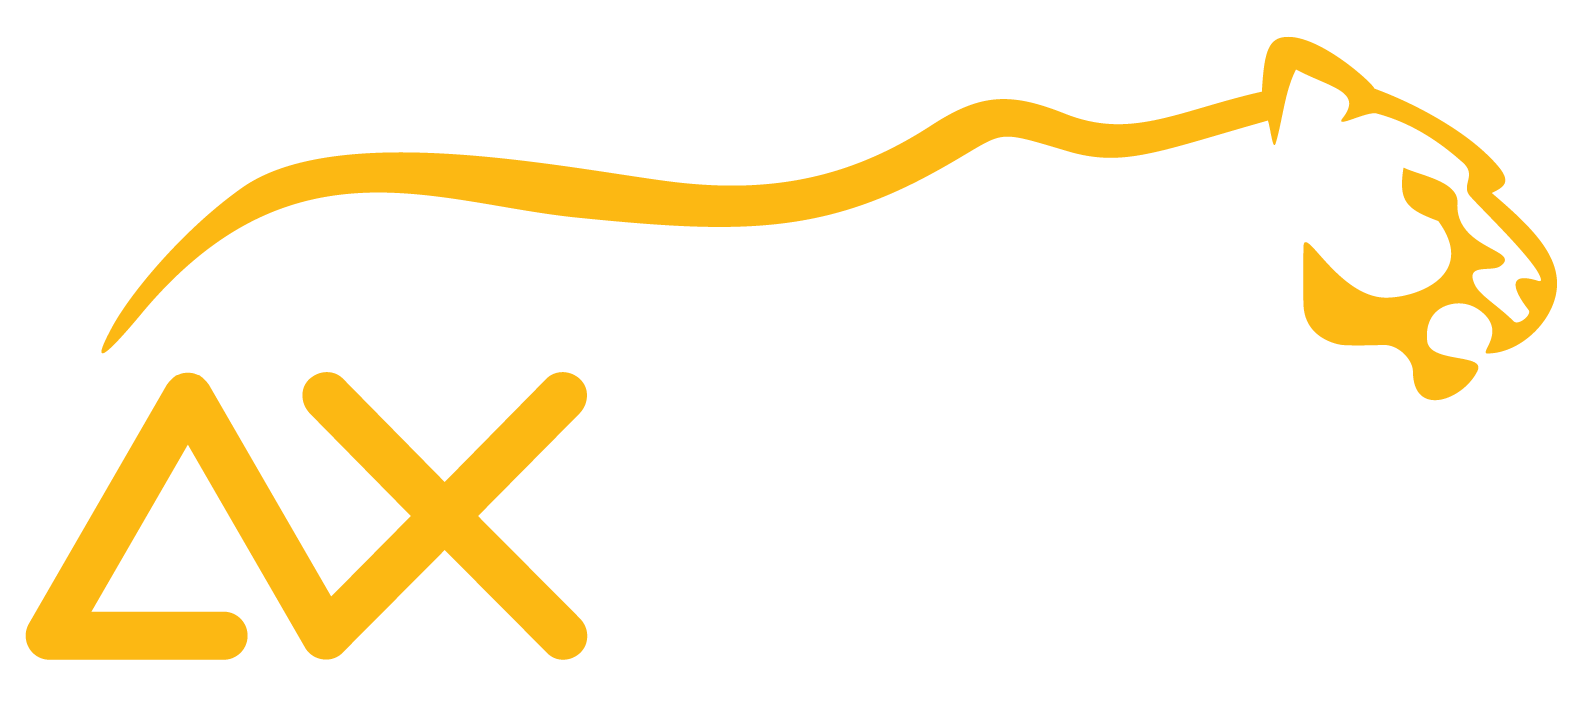 Axnet